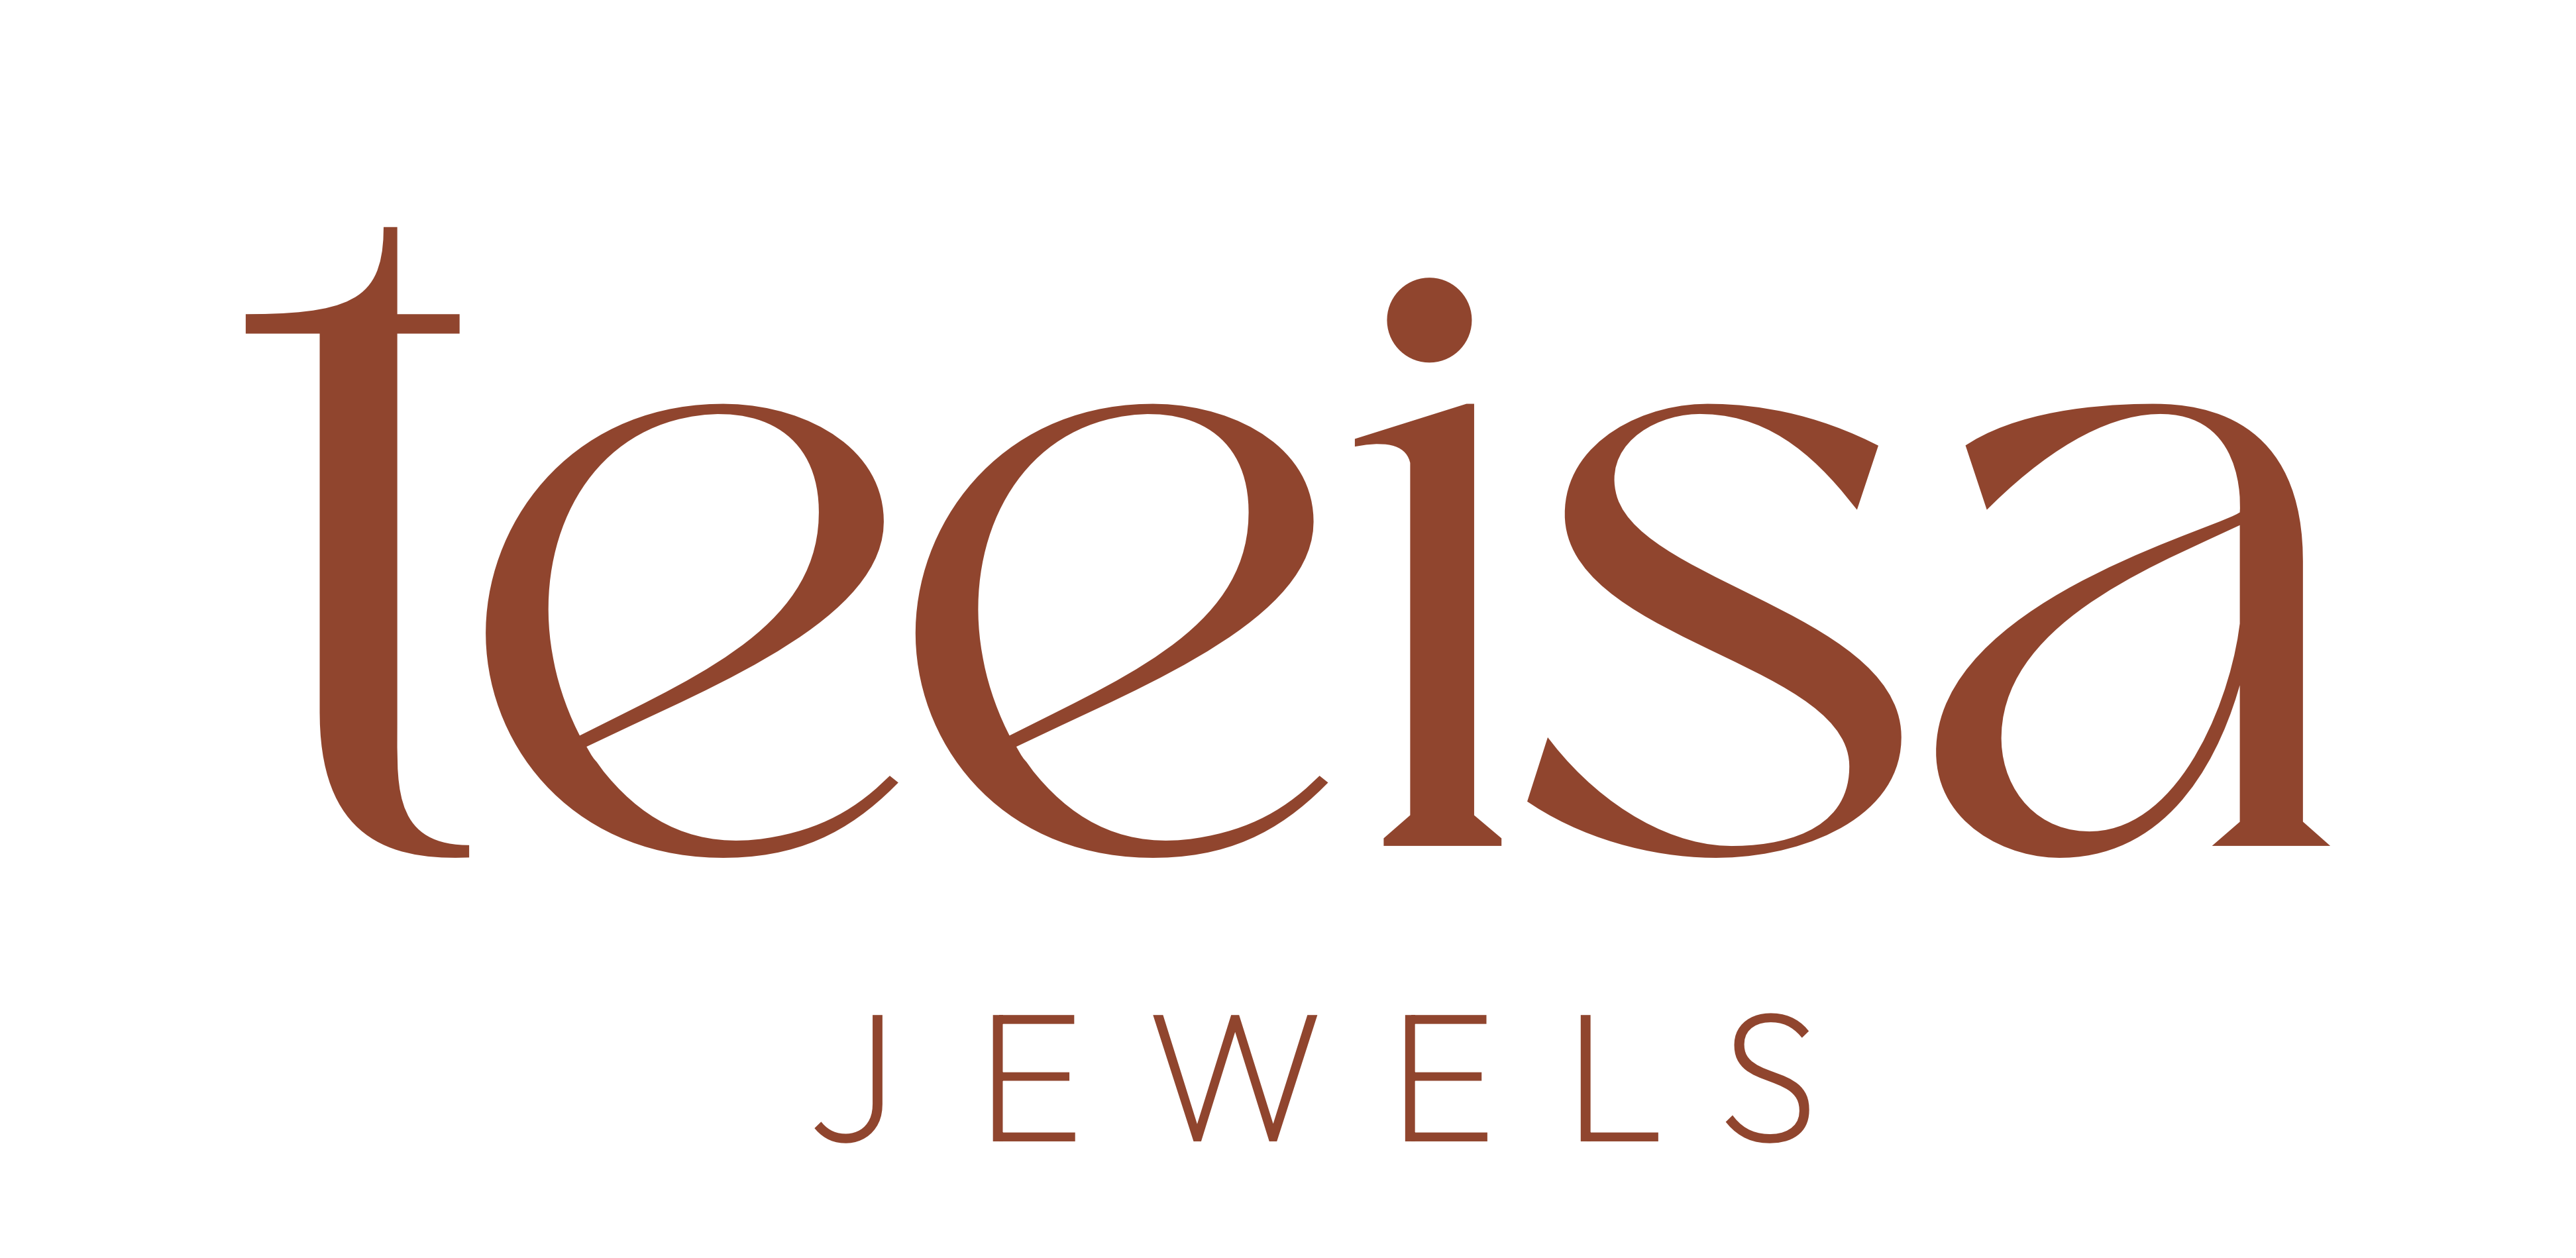 Teeisa Jewels